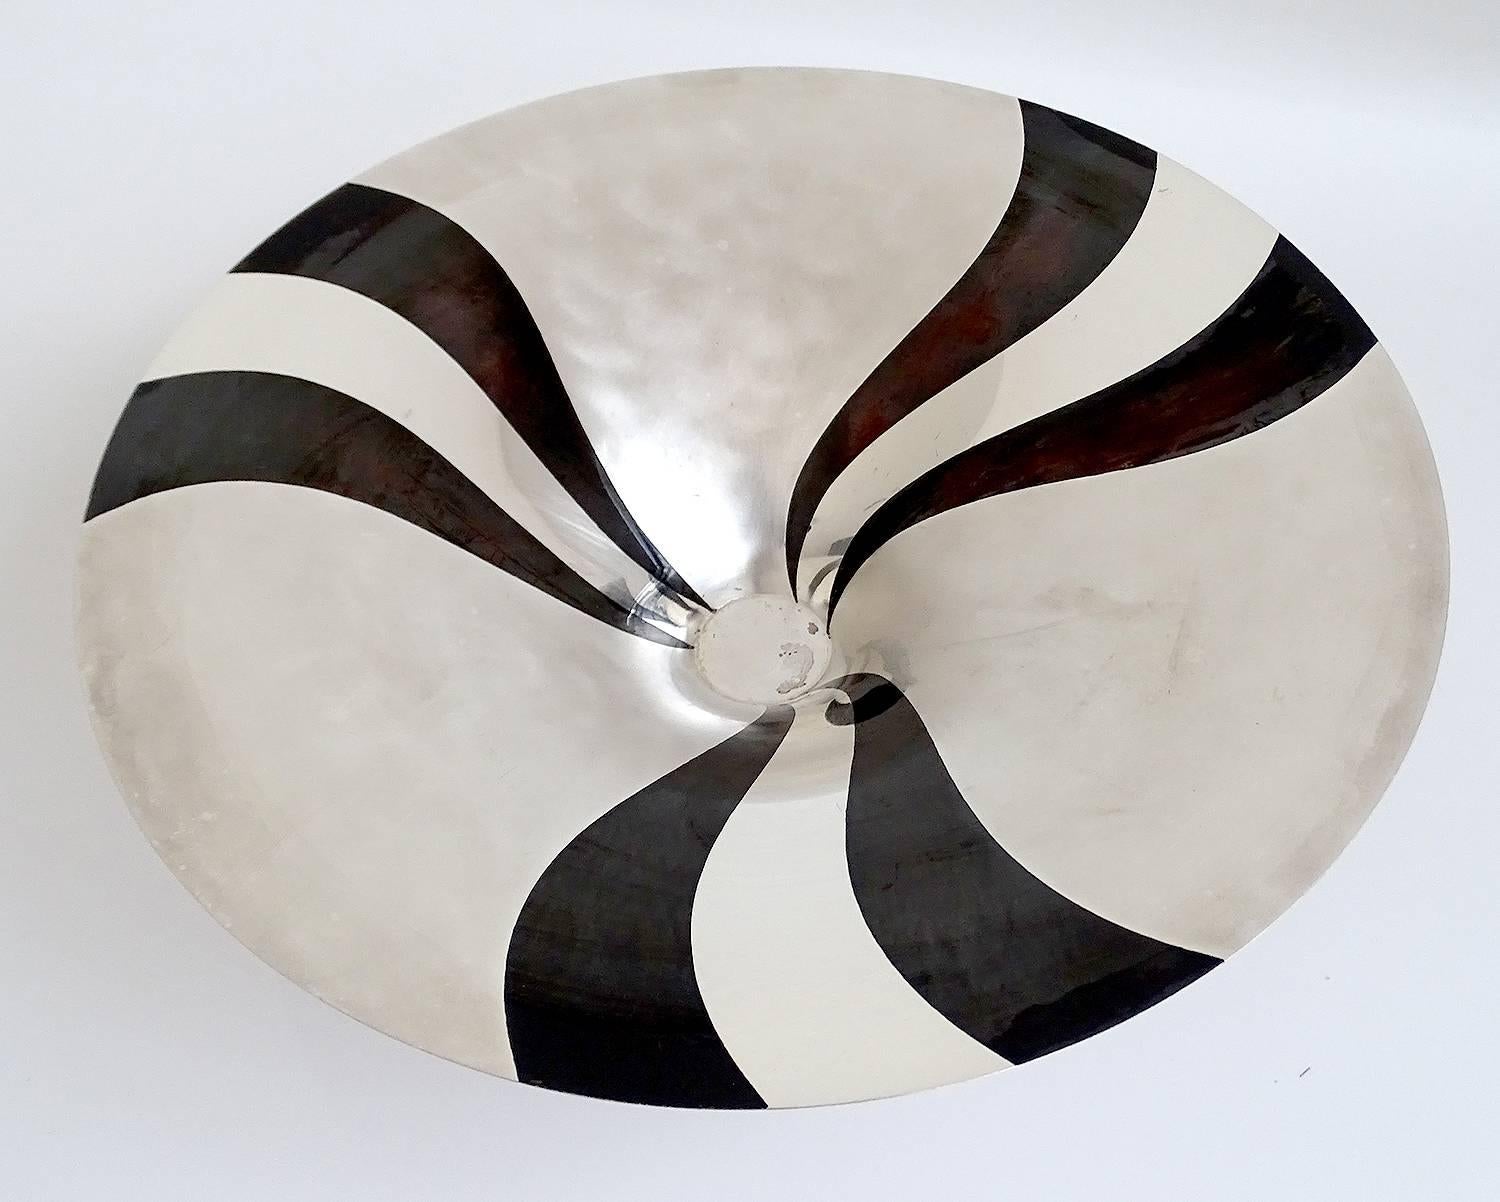 Large Art Deco WMF Ikora Silver Plated Bowl Centerpiece, 1930s Modernist Design 4